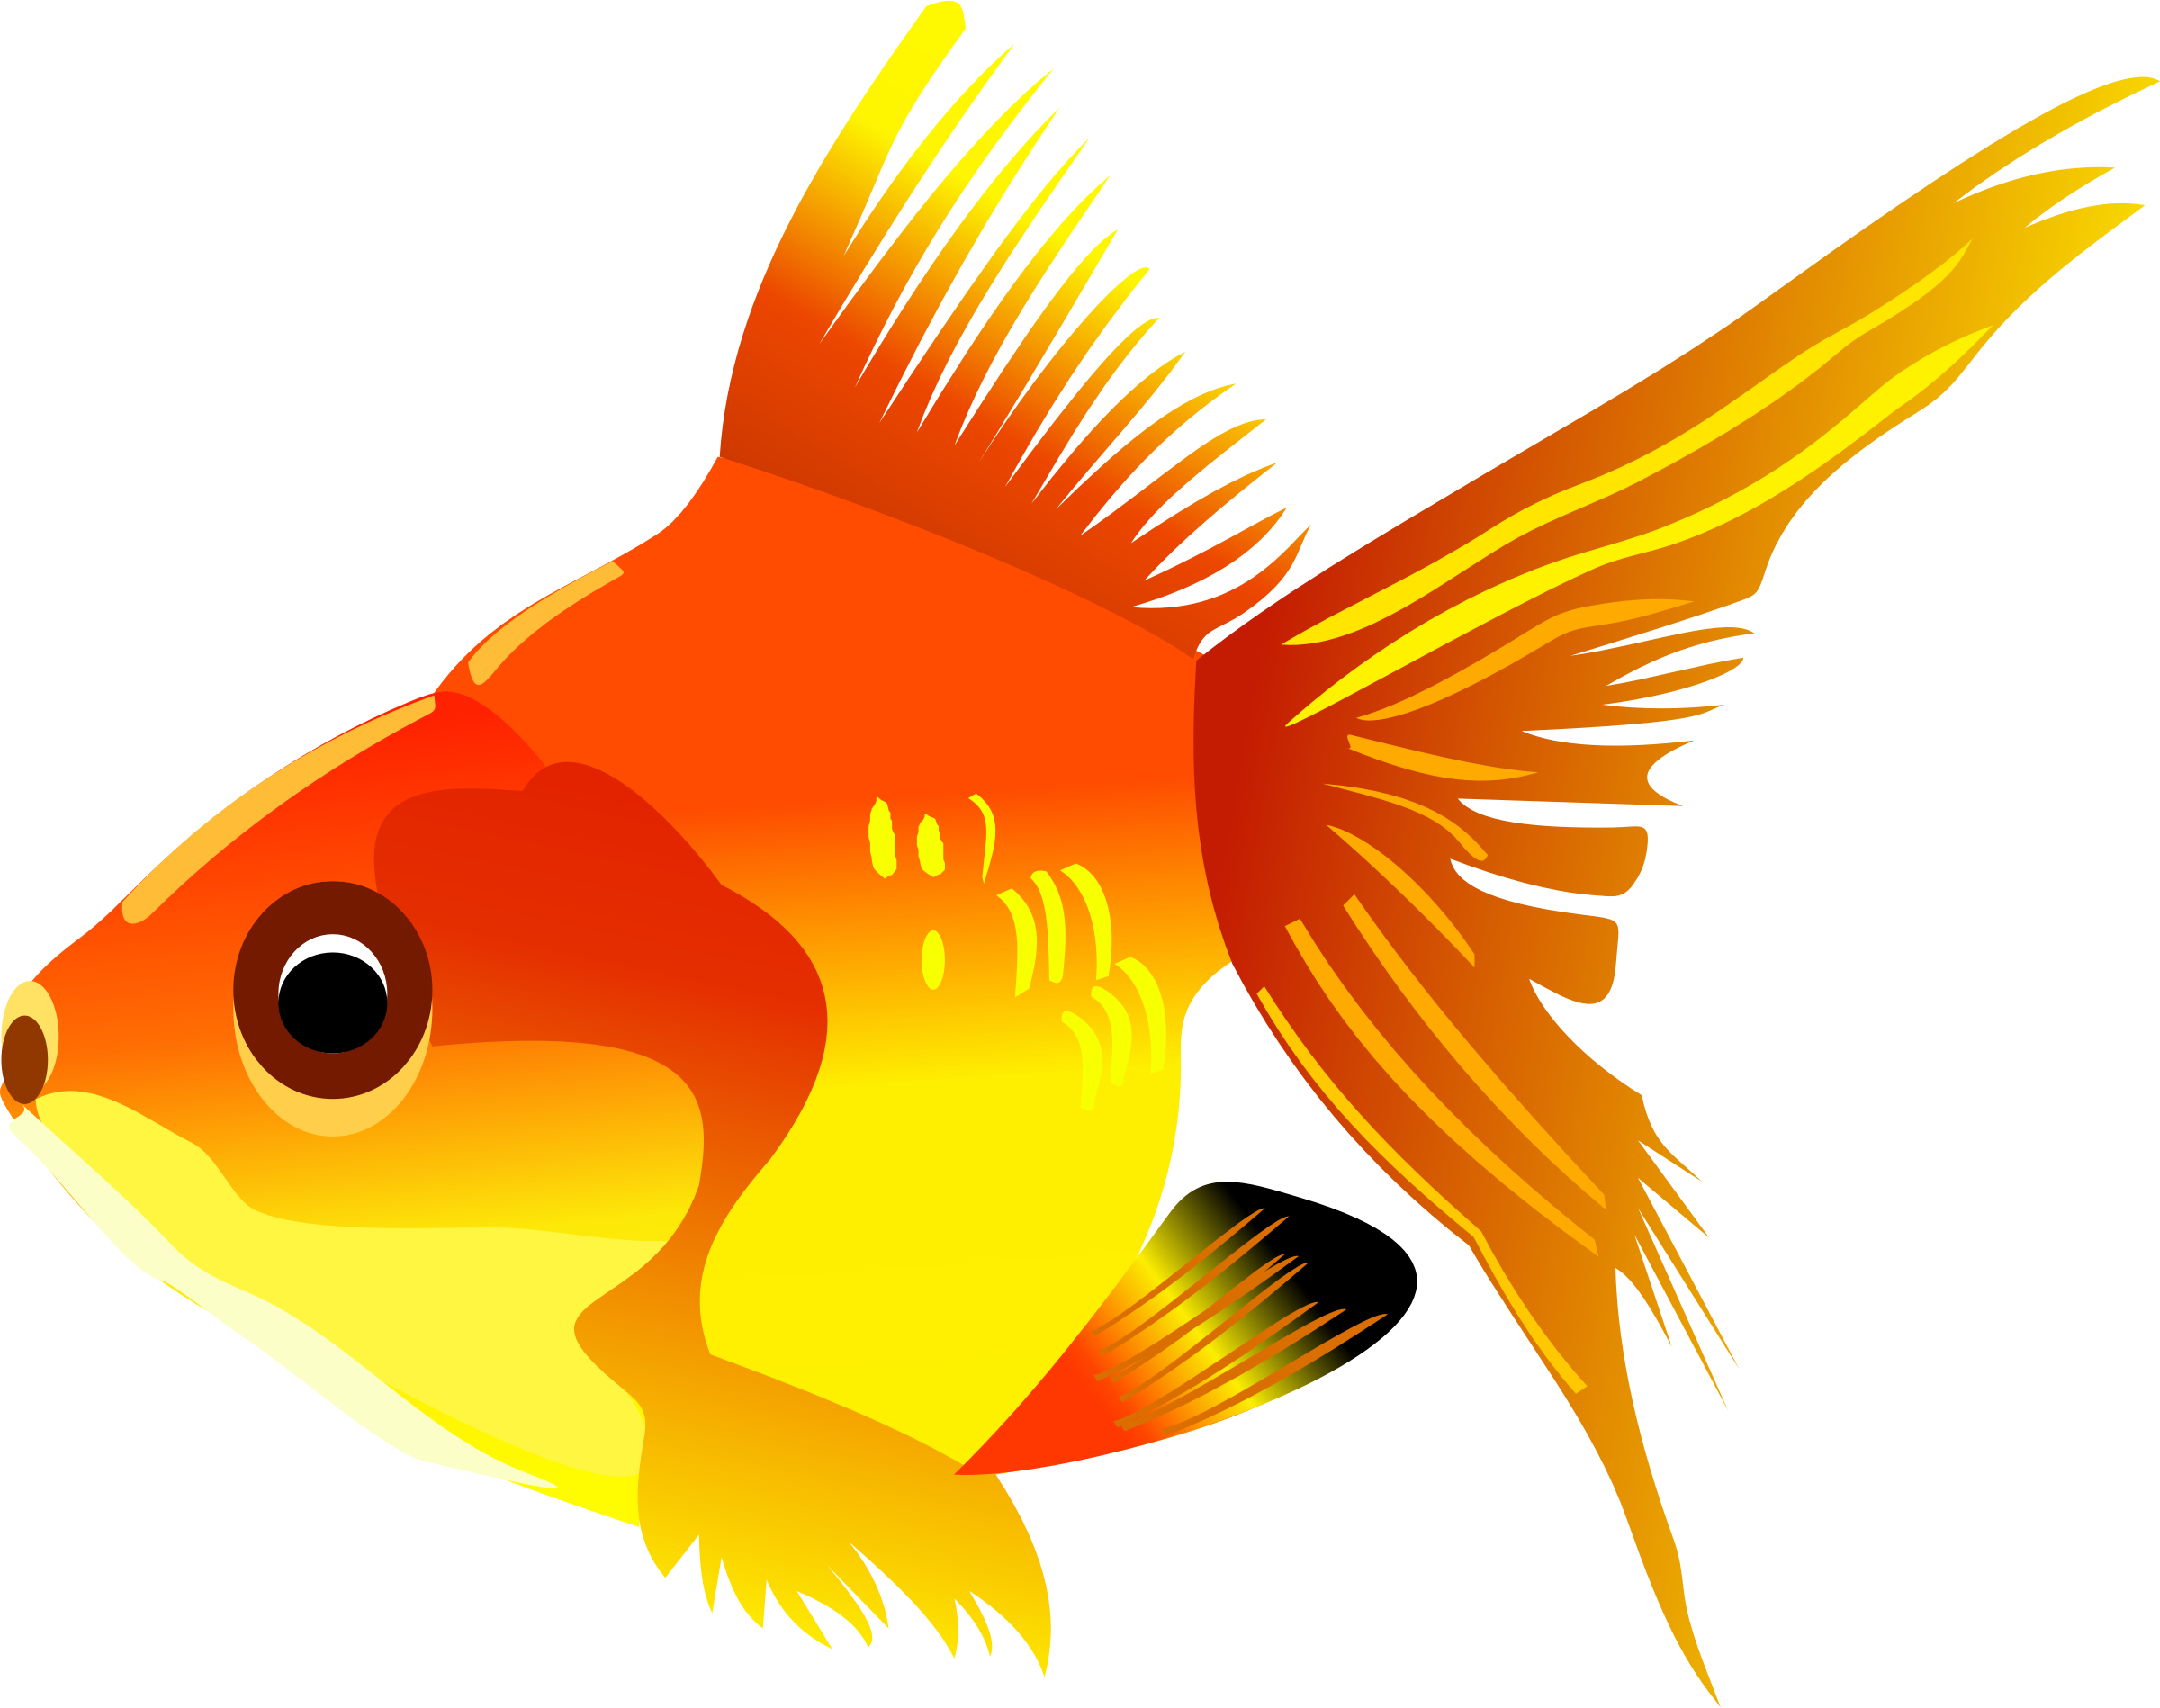 Goldfish clipart colorful. Fish icons big image